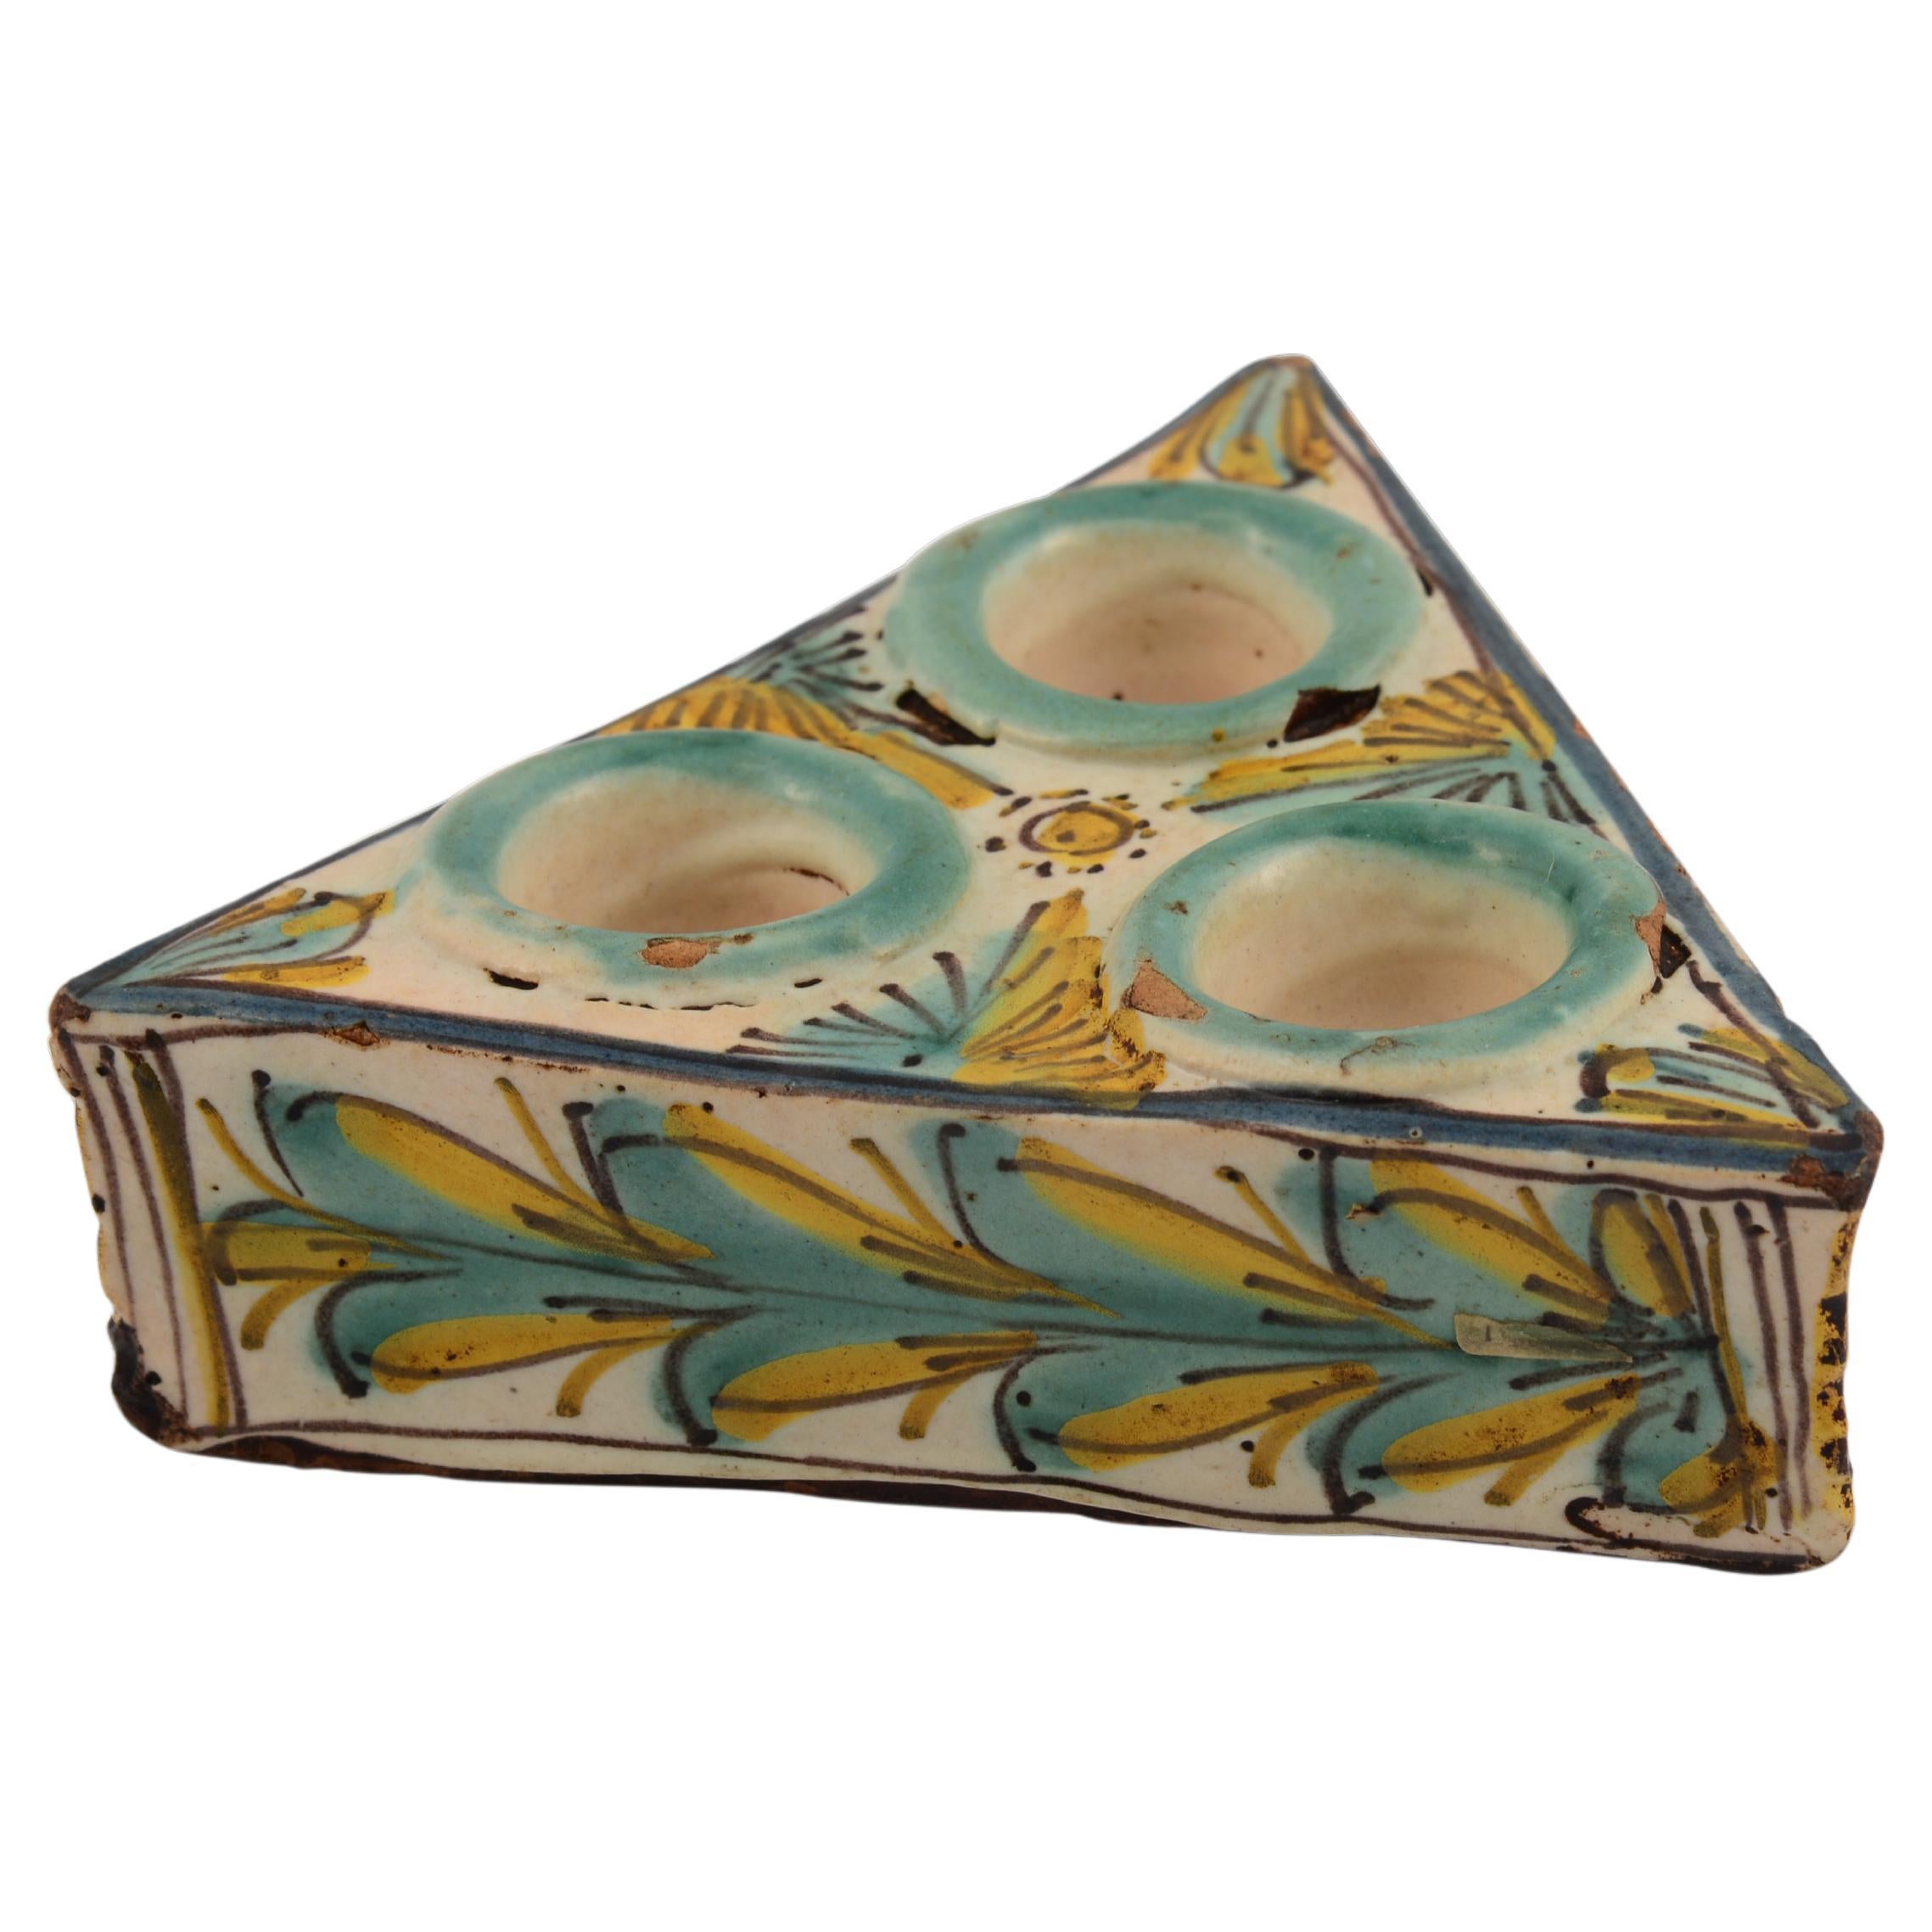 Glazed ceramic spice rack. Talavera de la Reina, 18th century. 